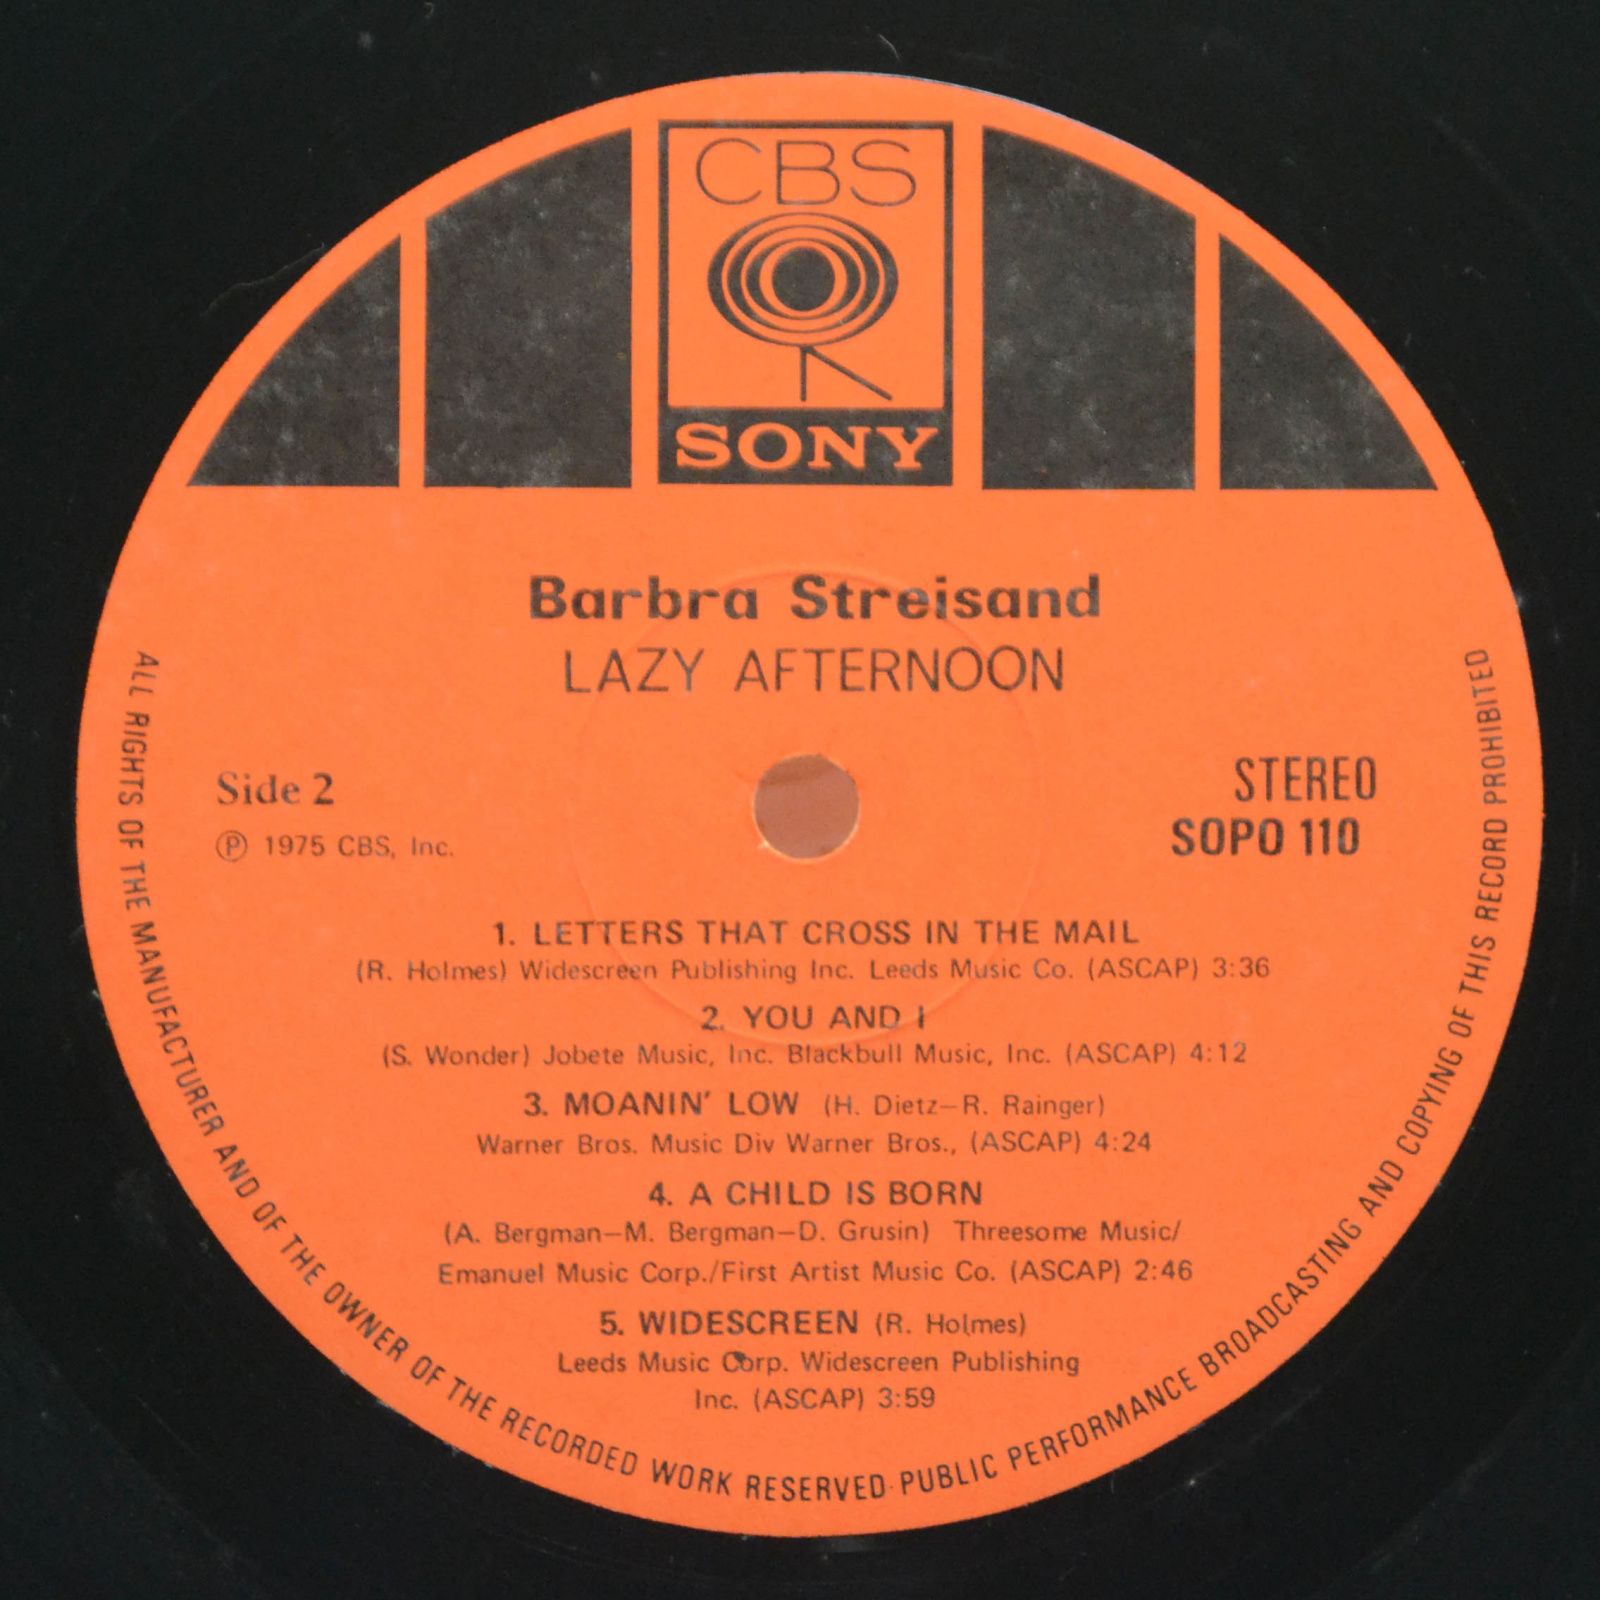 Barbra Streisand — Lazy Afternoon, 1975